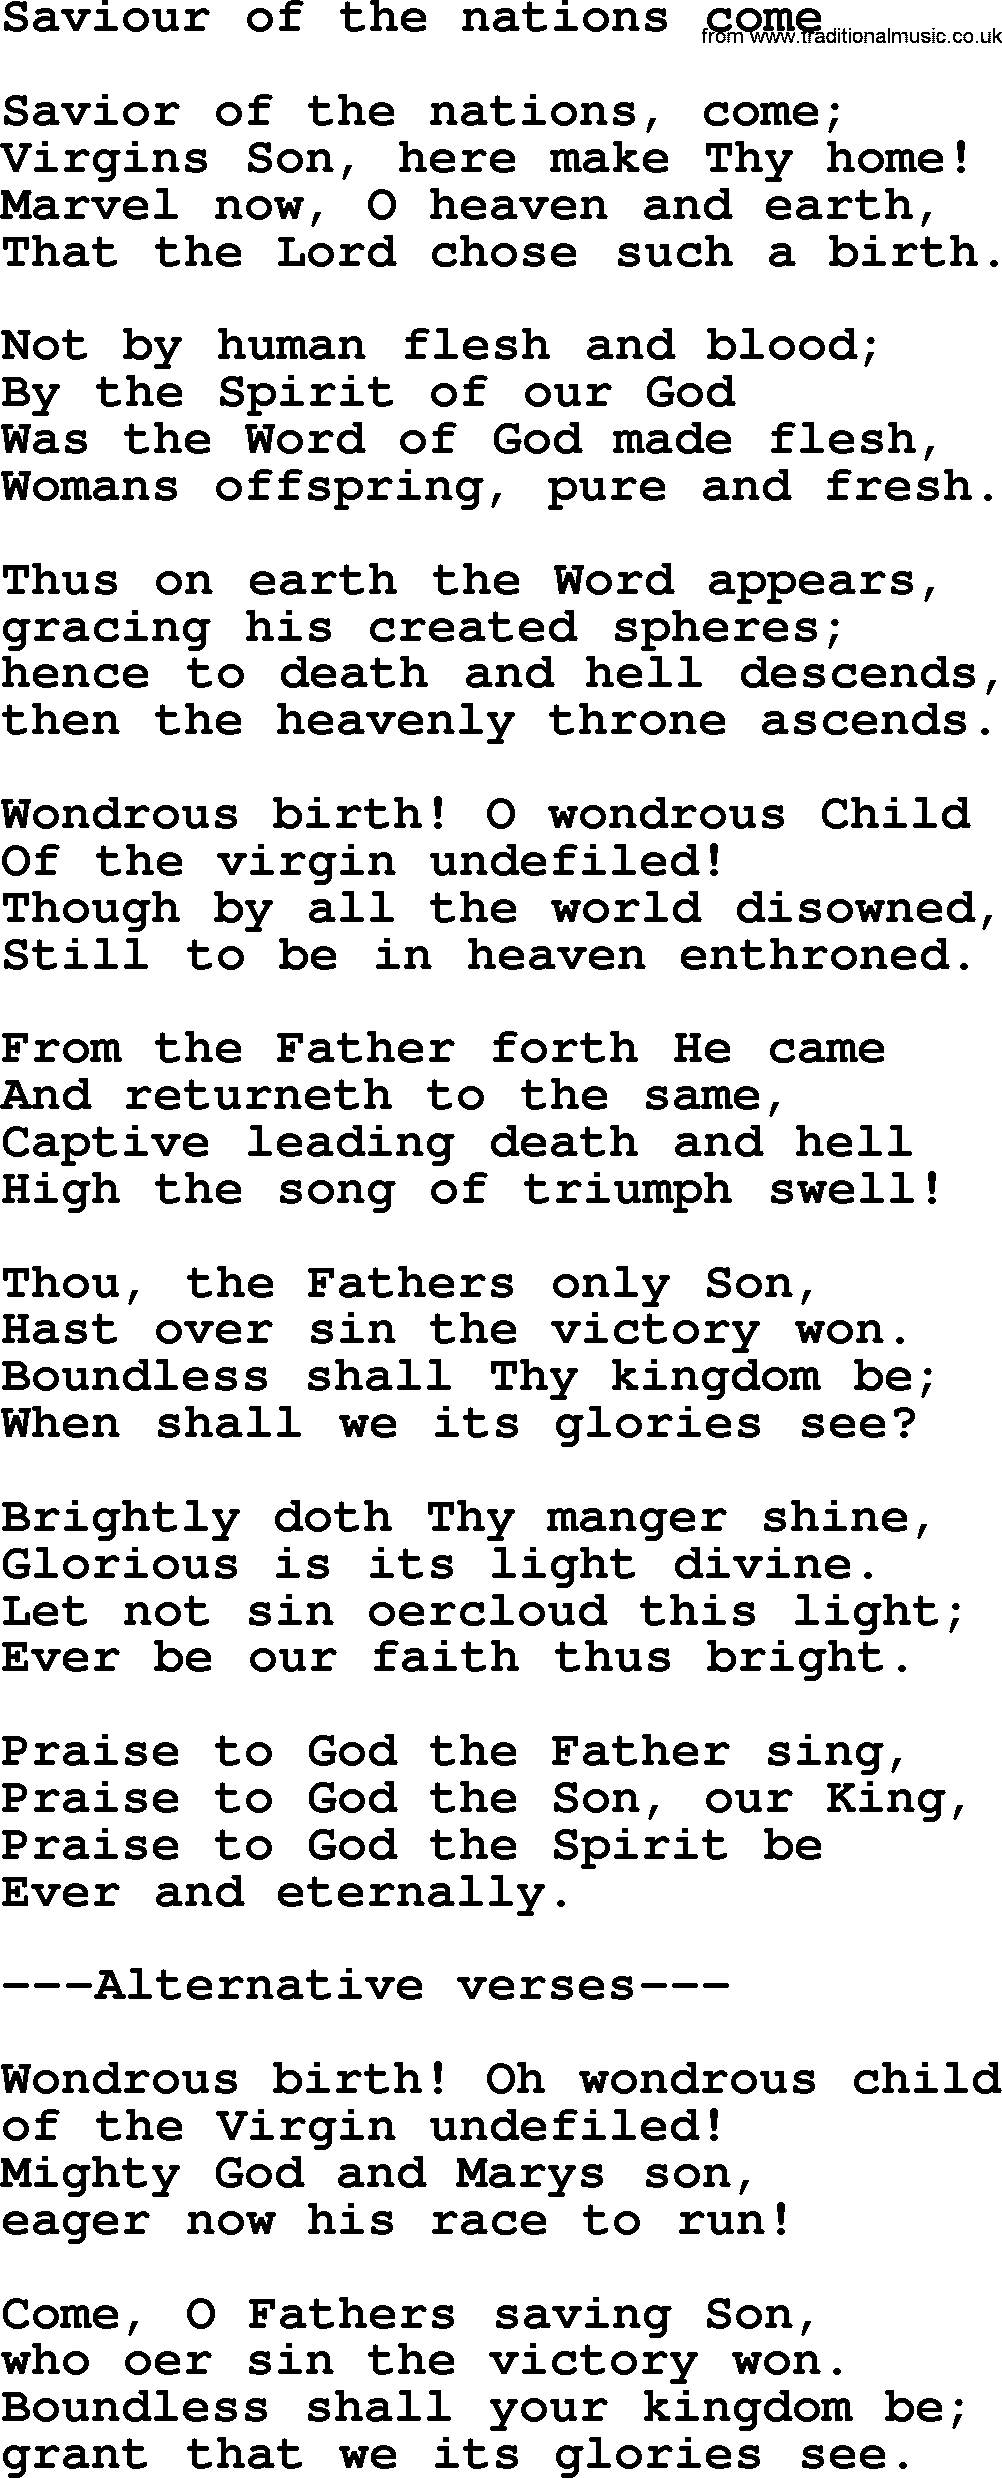 Presbyterian Hymns collection, Hymn: Saviour Of The Nations Come, lyrics and PDF